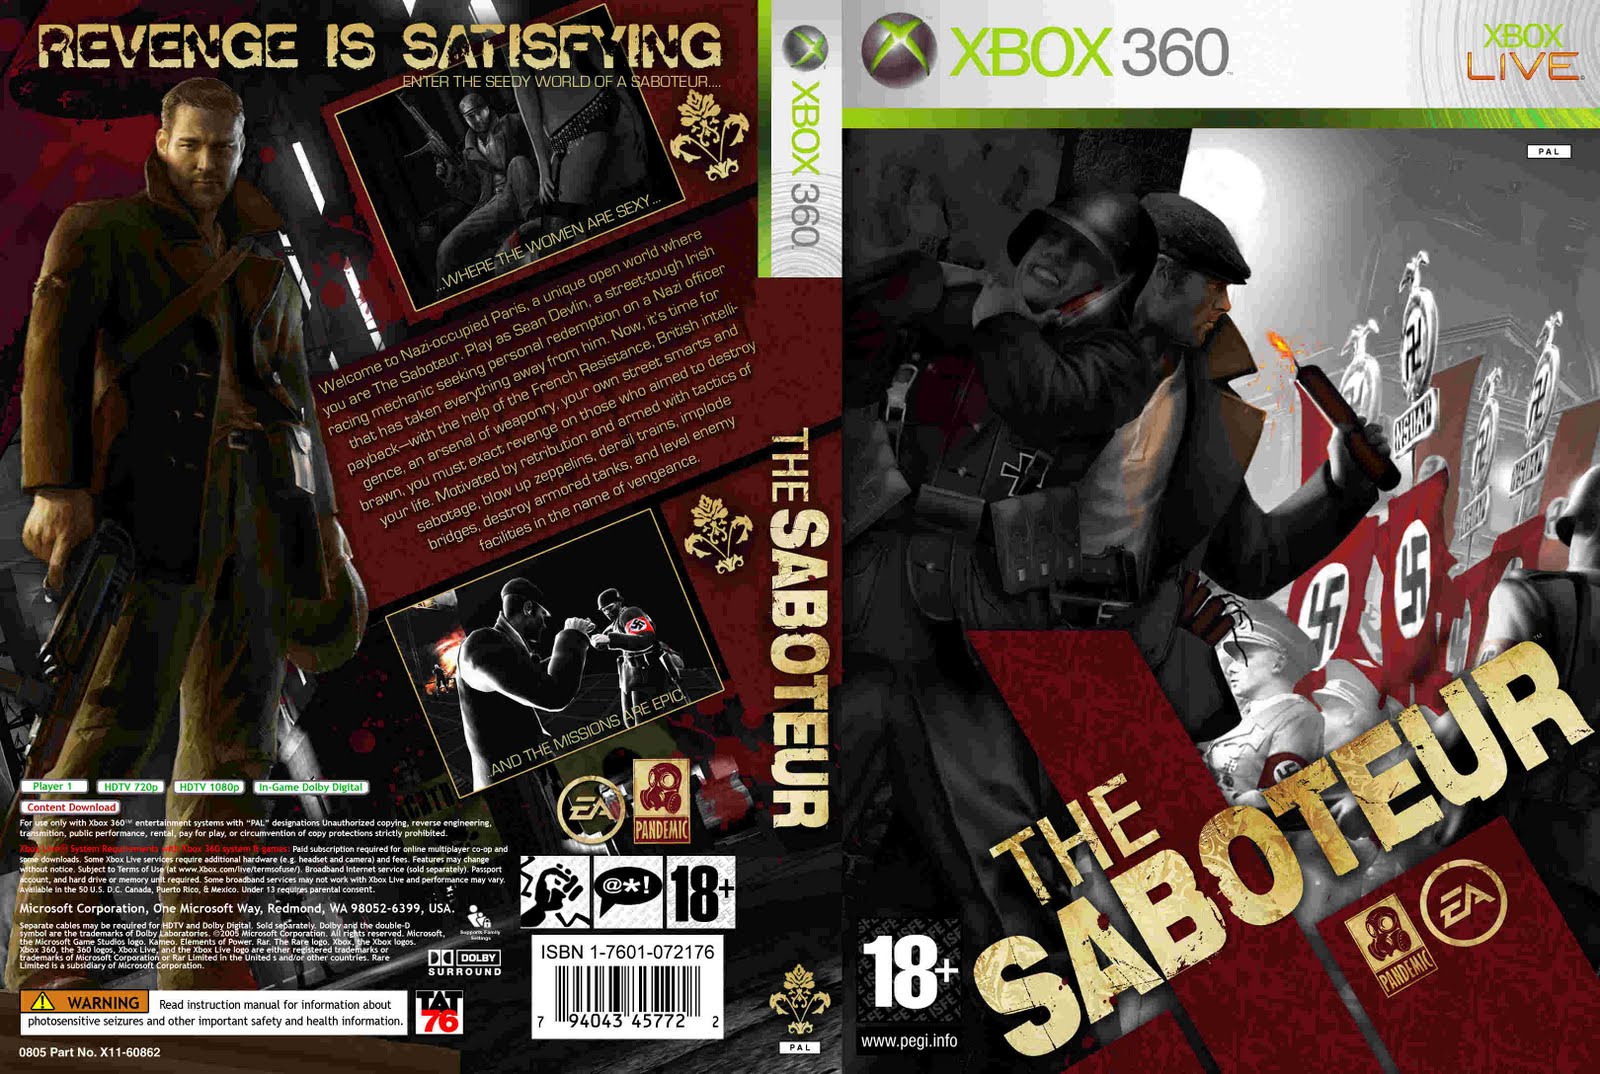 Saboteur купить steam. The Saboteur (2009). The Saboteur ps3 диск. Xbox 360 the Saboteur обложка. The Saboteur ps3 обложка.